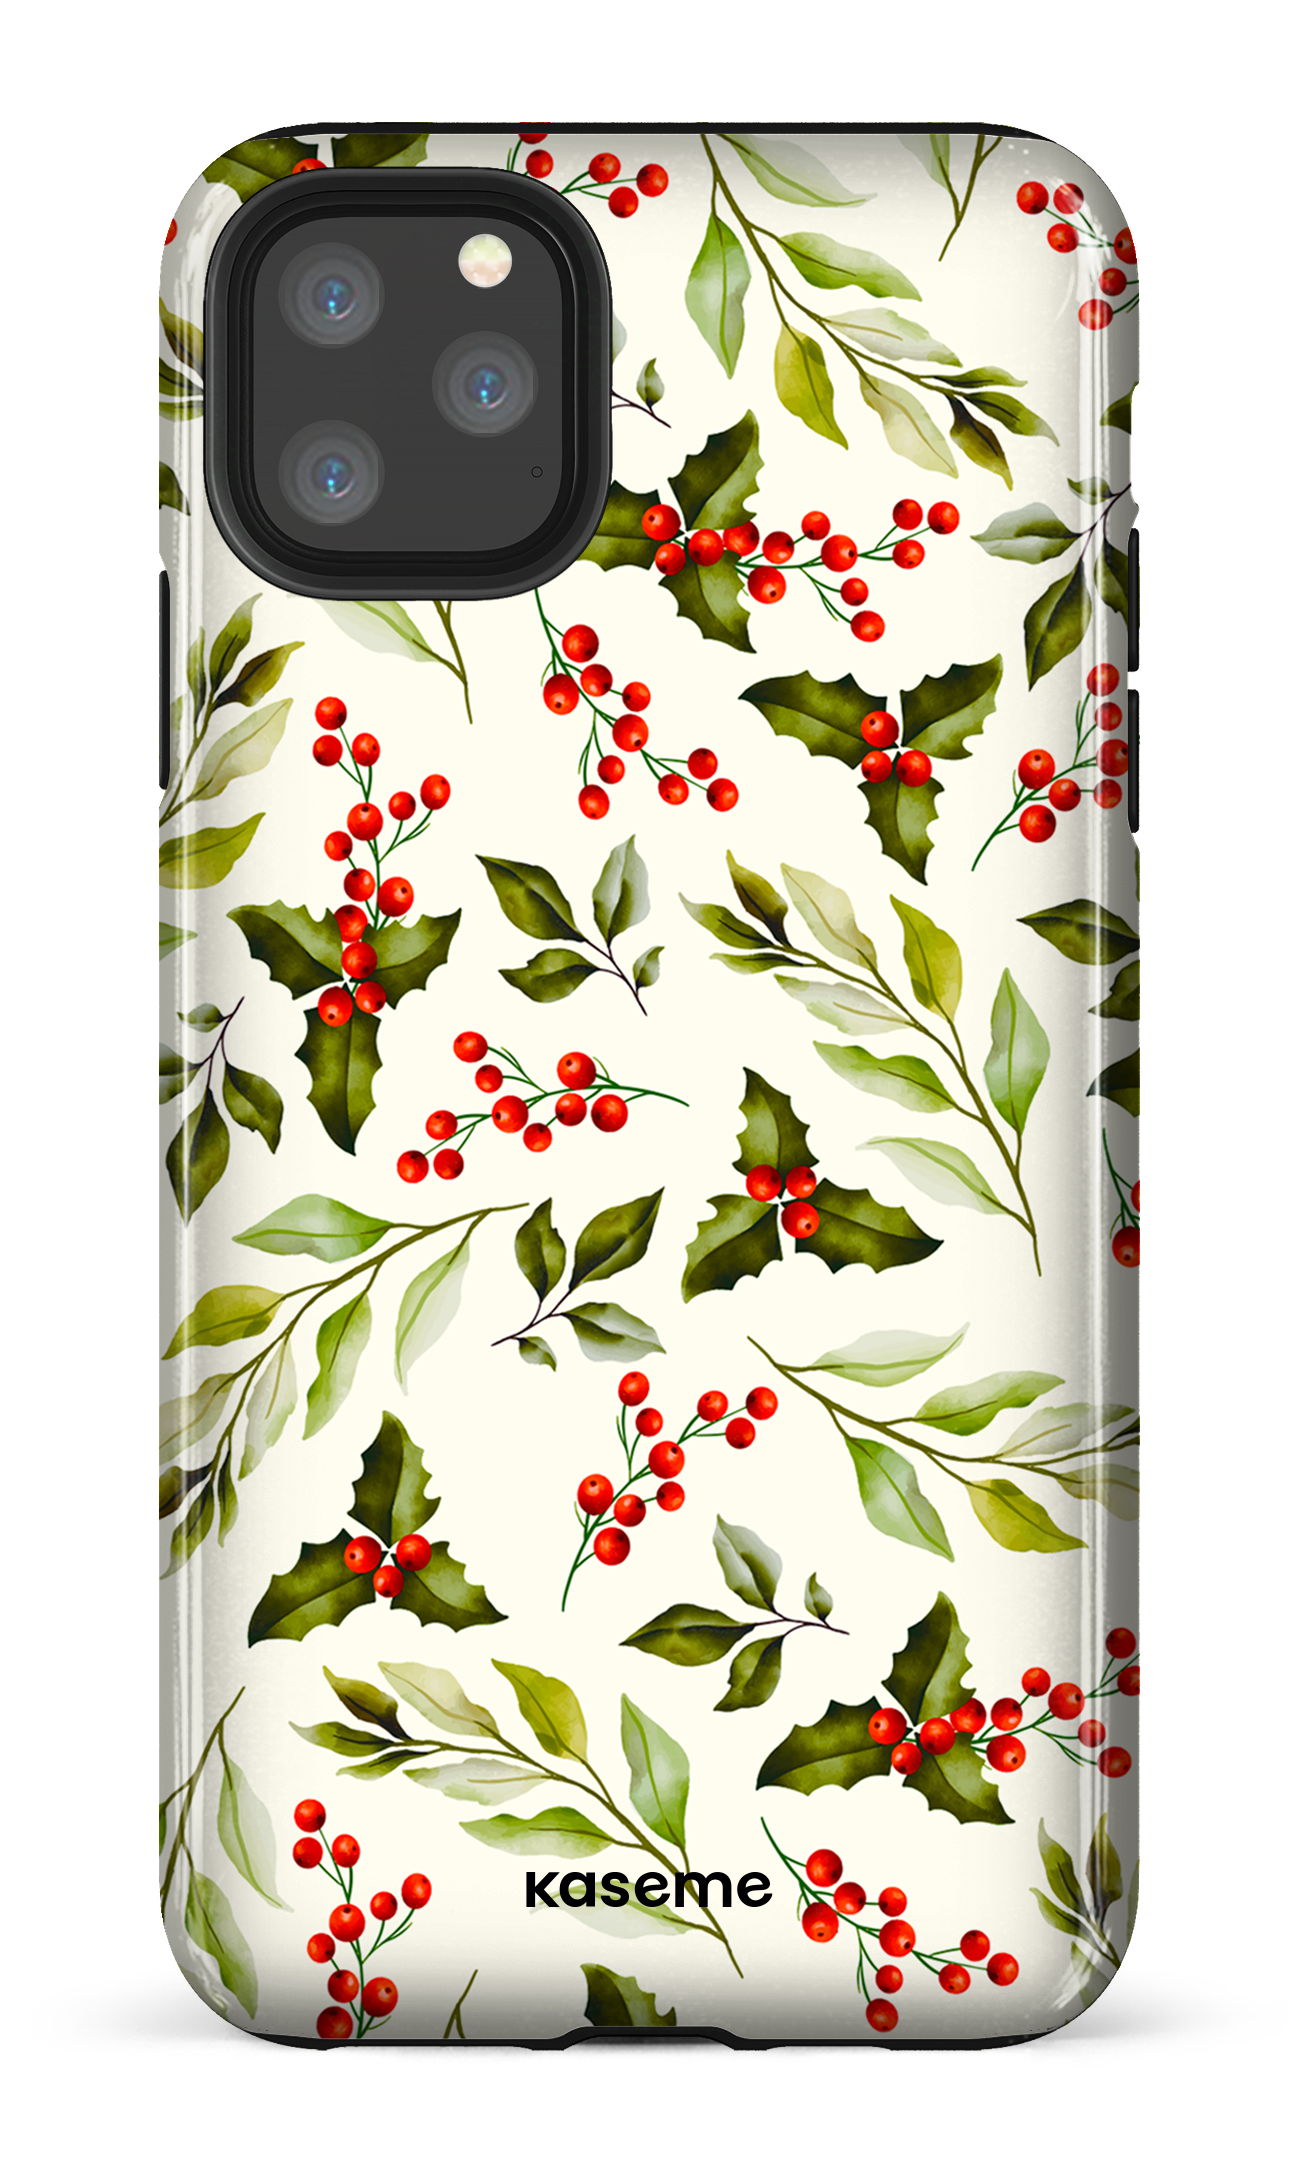 Mistletoe - iPhone 11 Pro Max